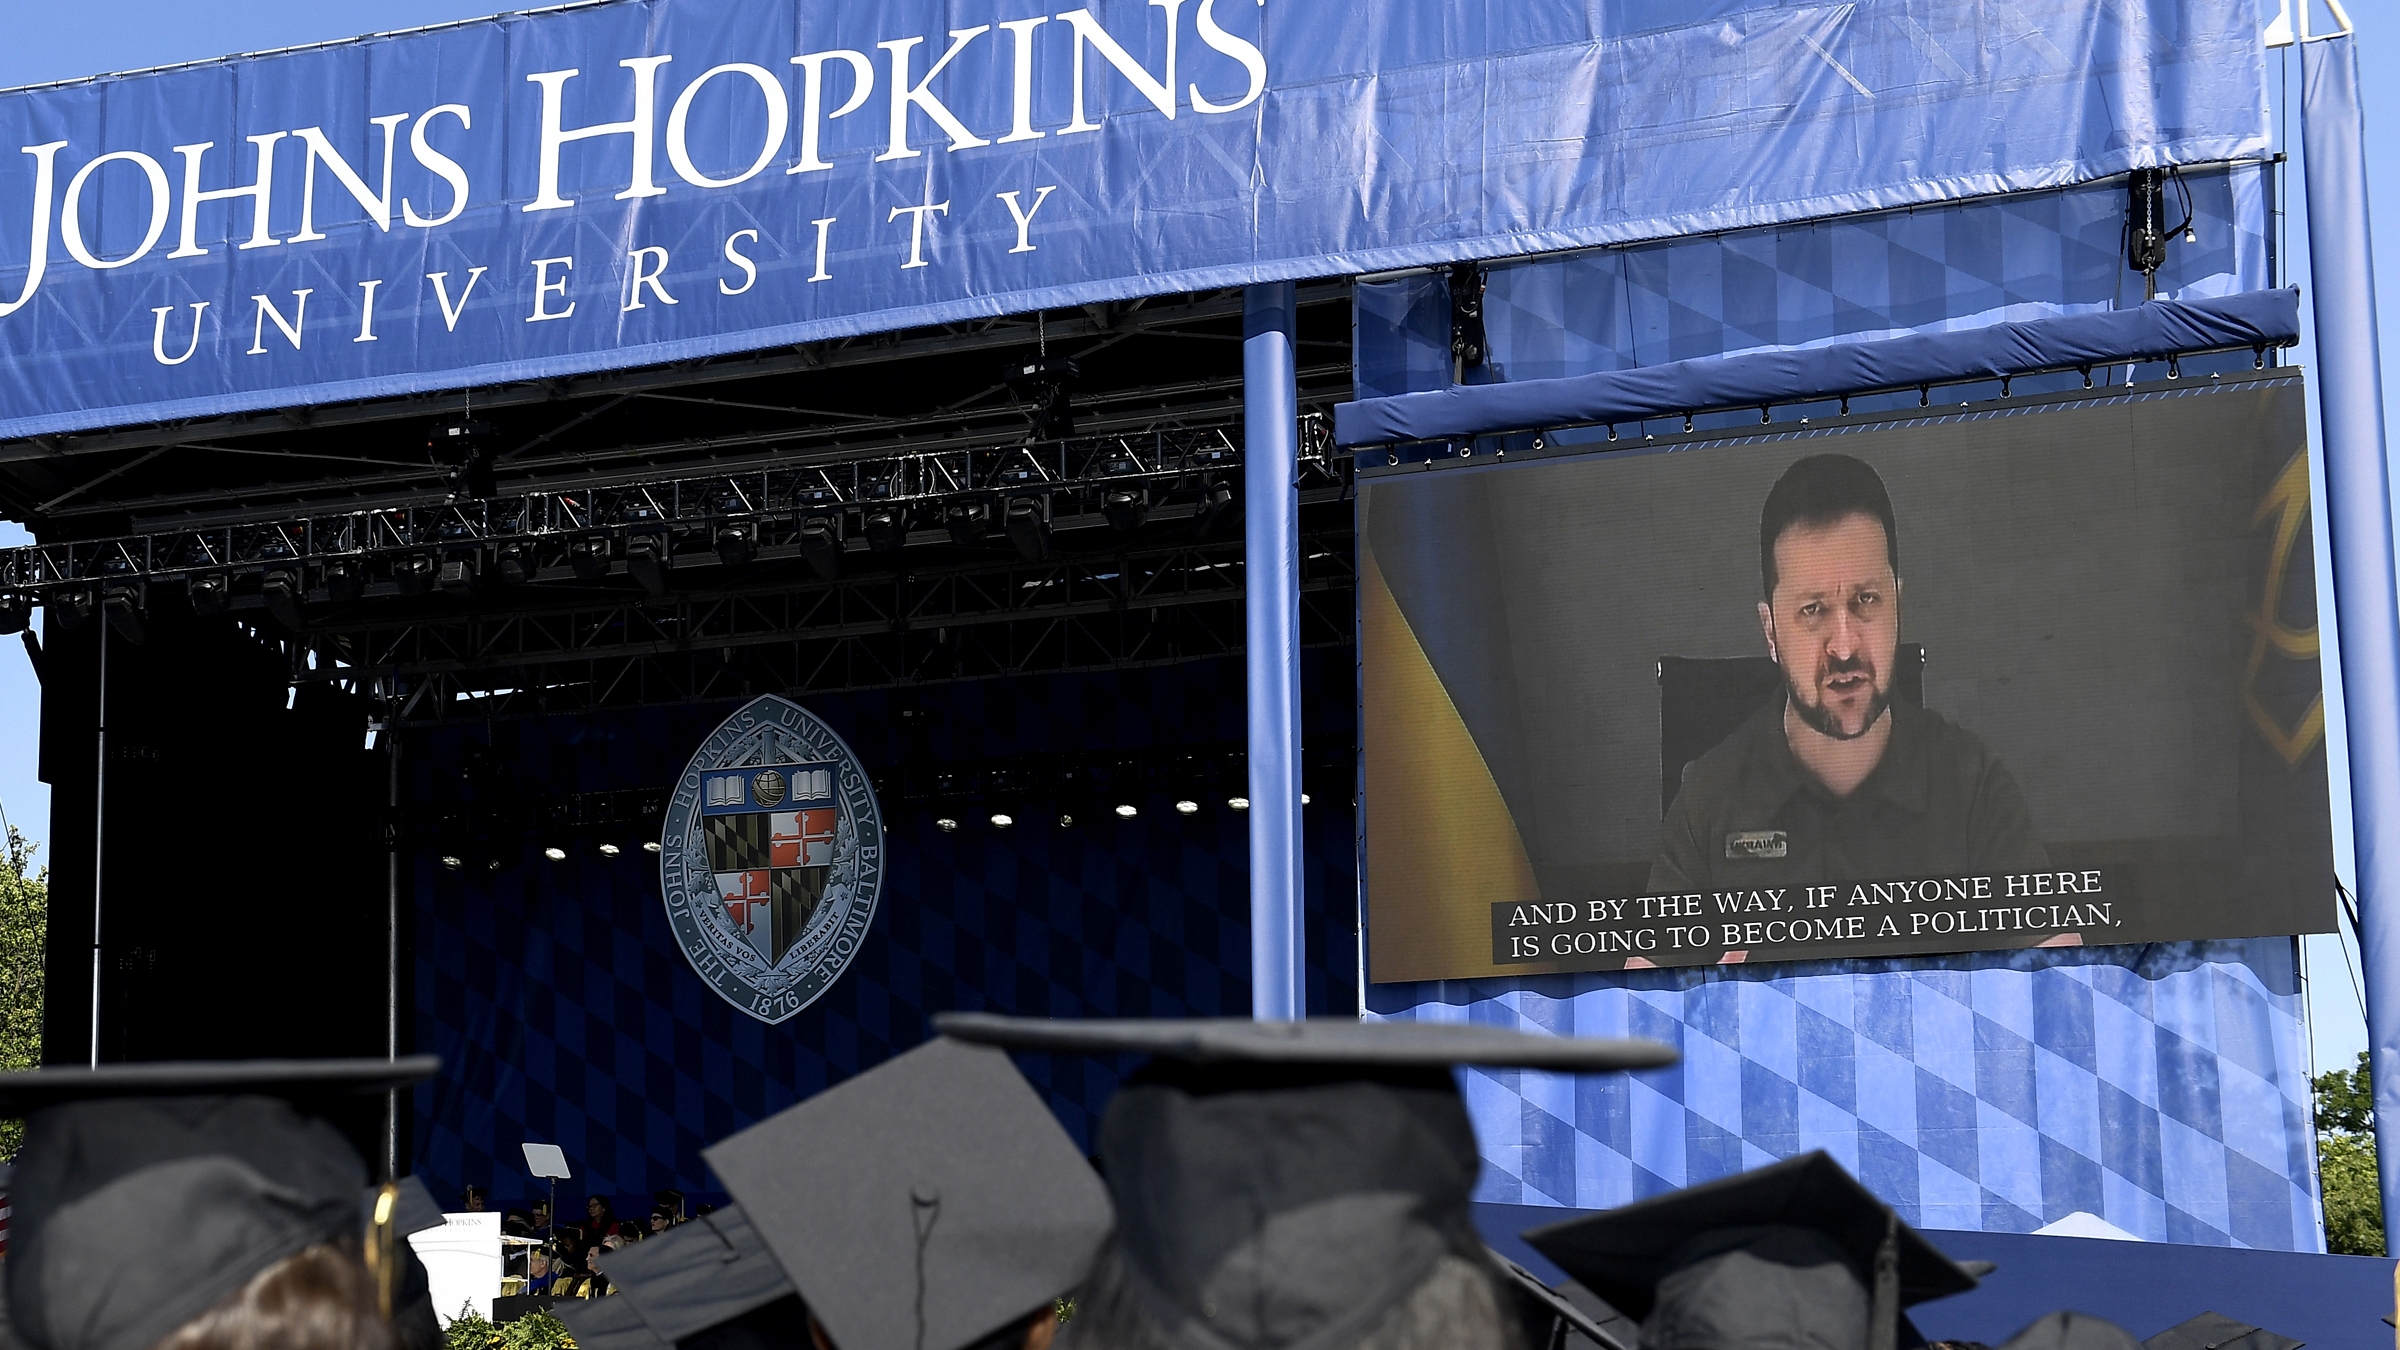 Johns Hopkins University Hats, Johns Hopkins University Caps